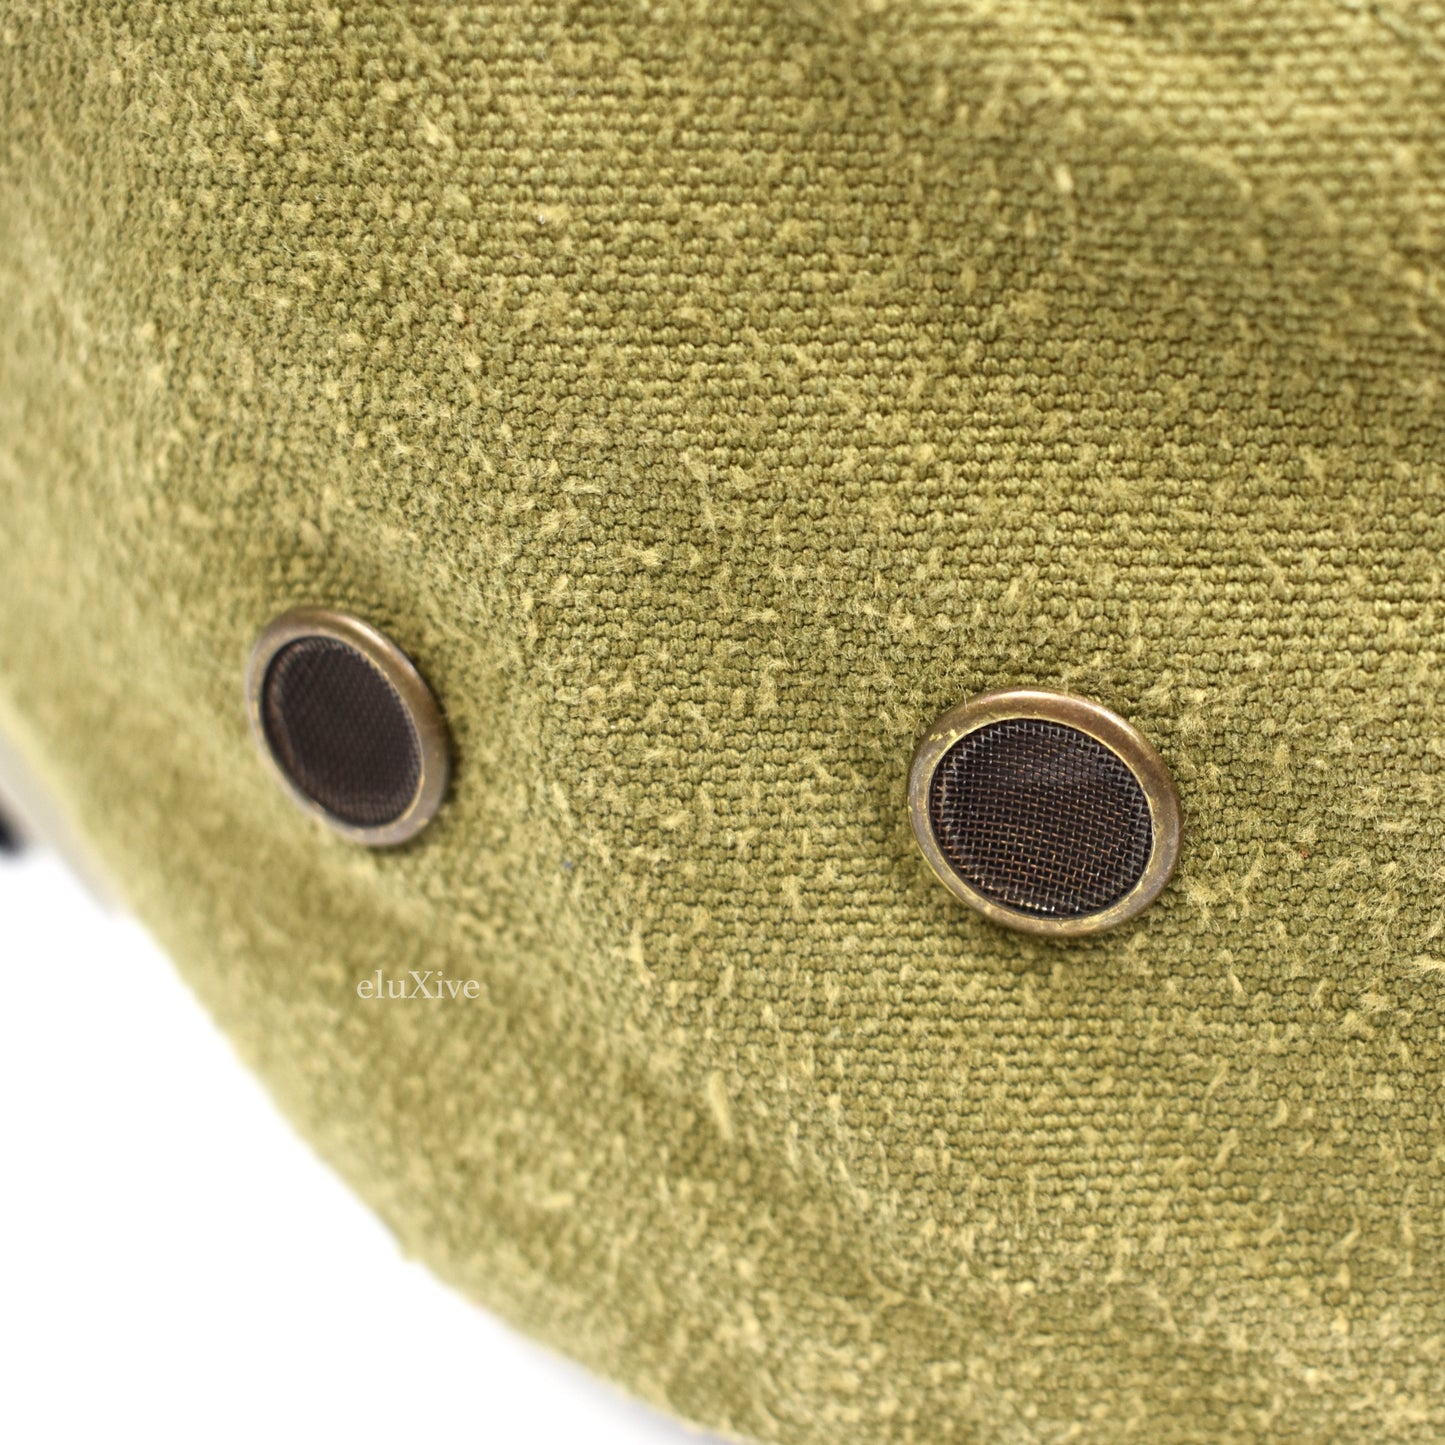 Supreme - Napped Canvas Box Logo Hat (Olive)